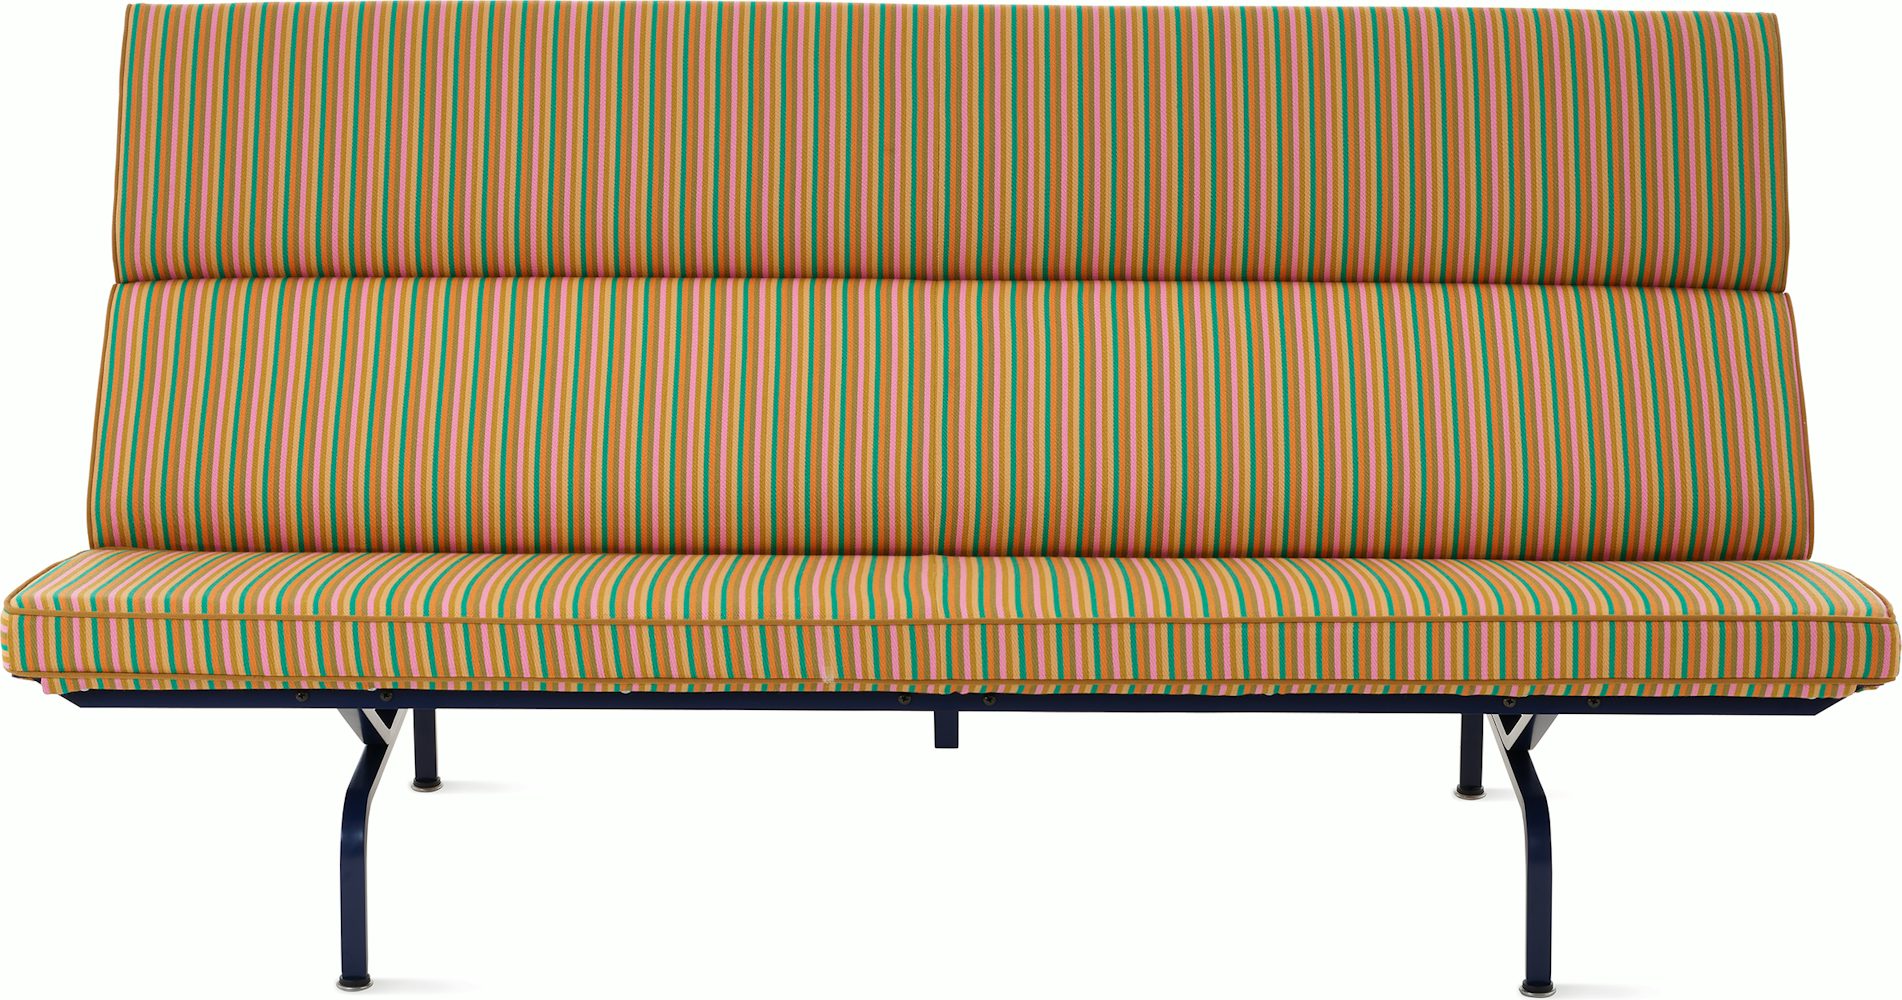 prins open haard Gematigd Eames Compact Sofa, Herman Miller x HAY – HAY